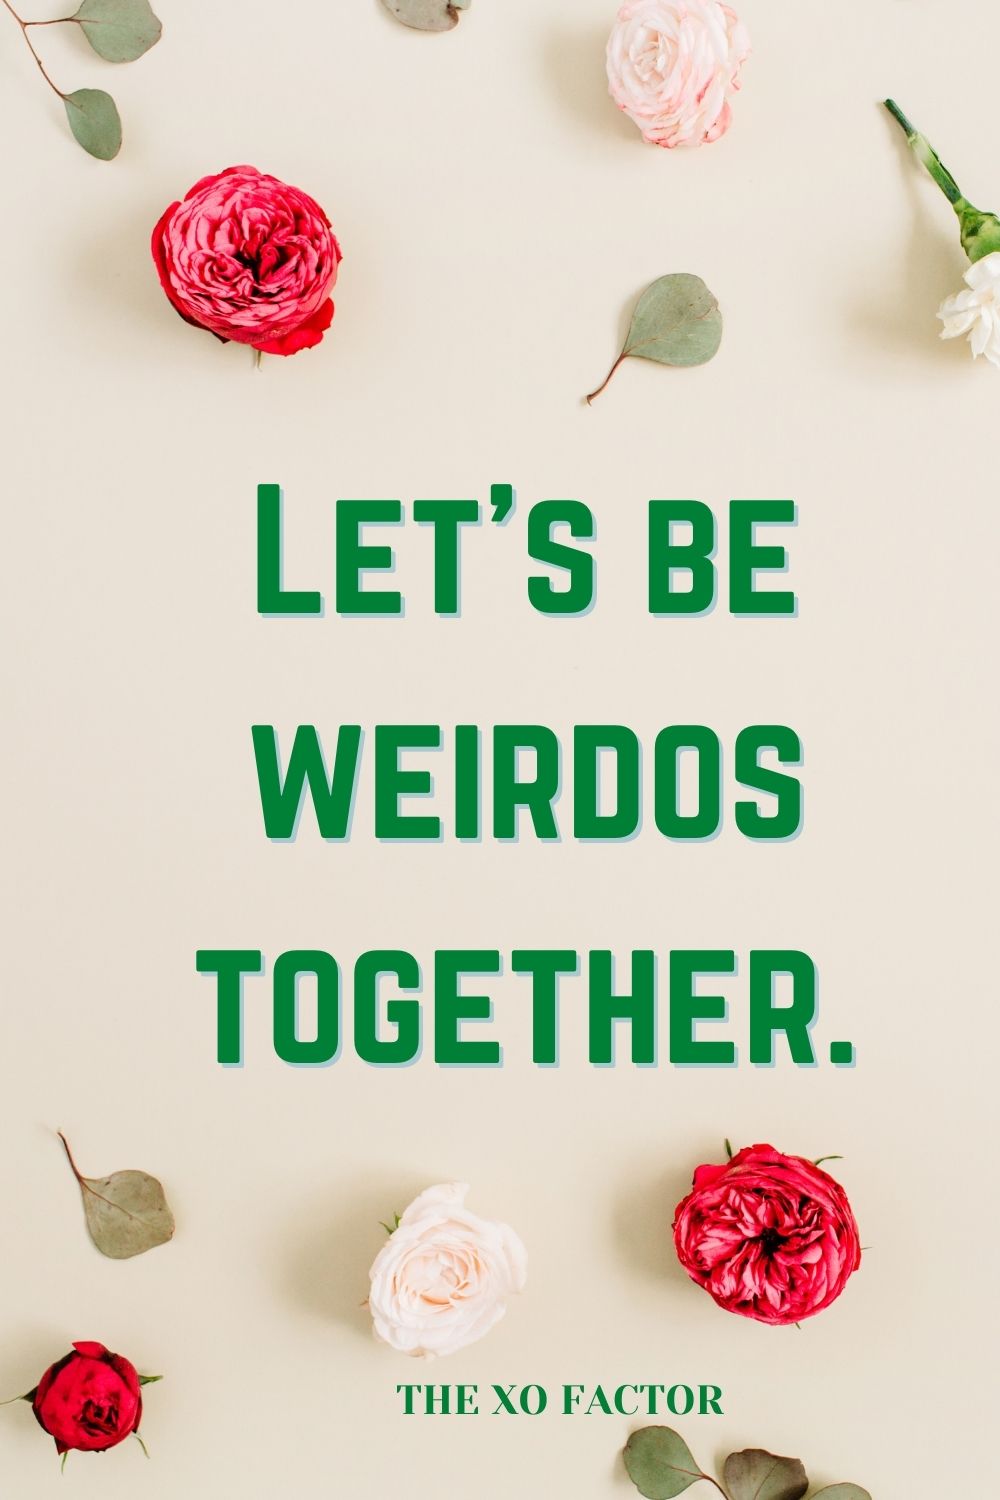 Let’s be weirdos together.